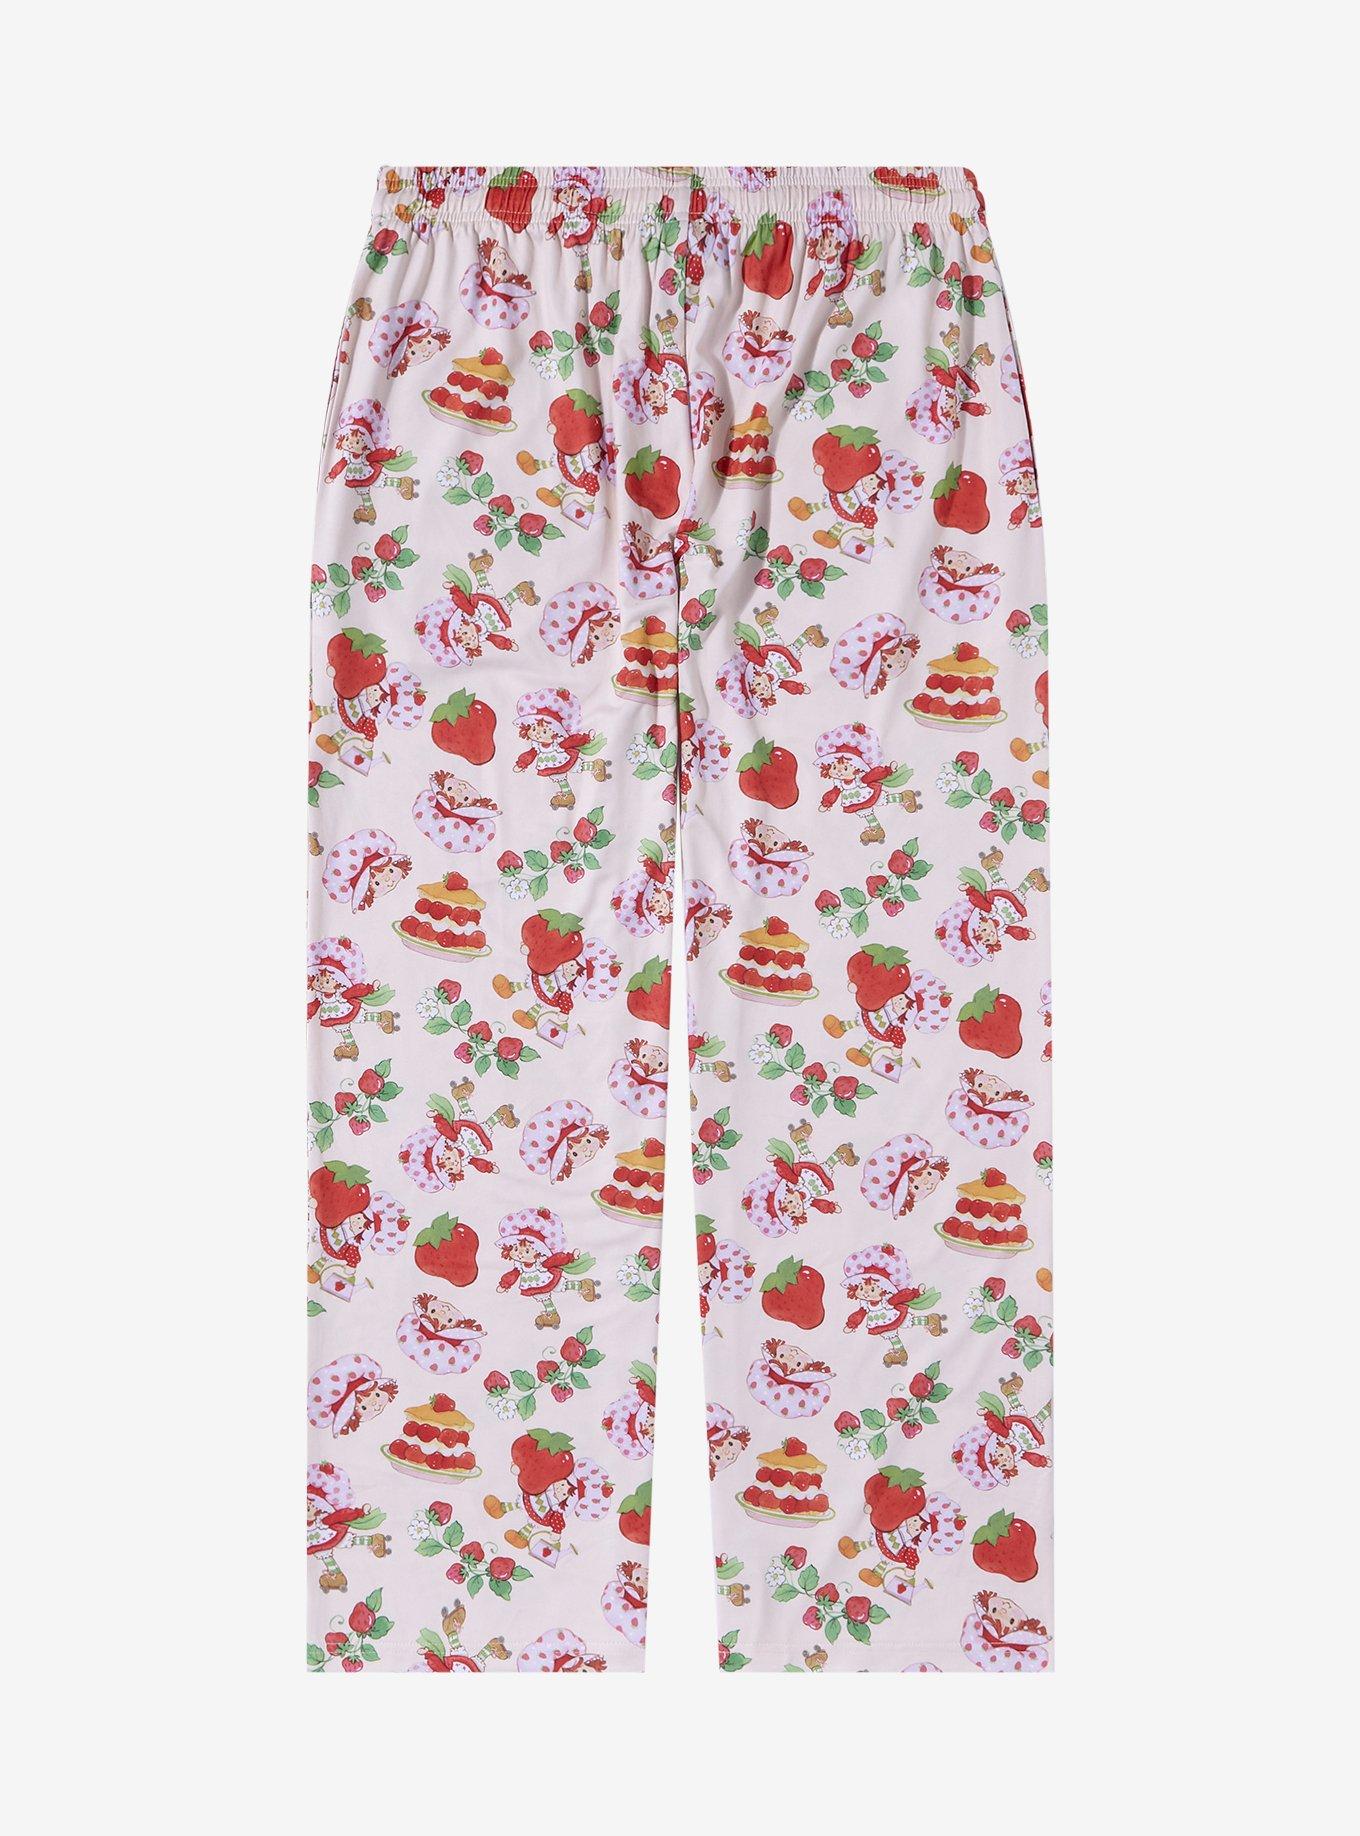 Strawberry Shortcake Icons Allover Print Women's Plus Size Sleep Pants - BoxLunch Exclusive, CREAM, alternate